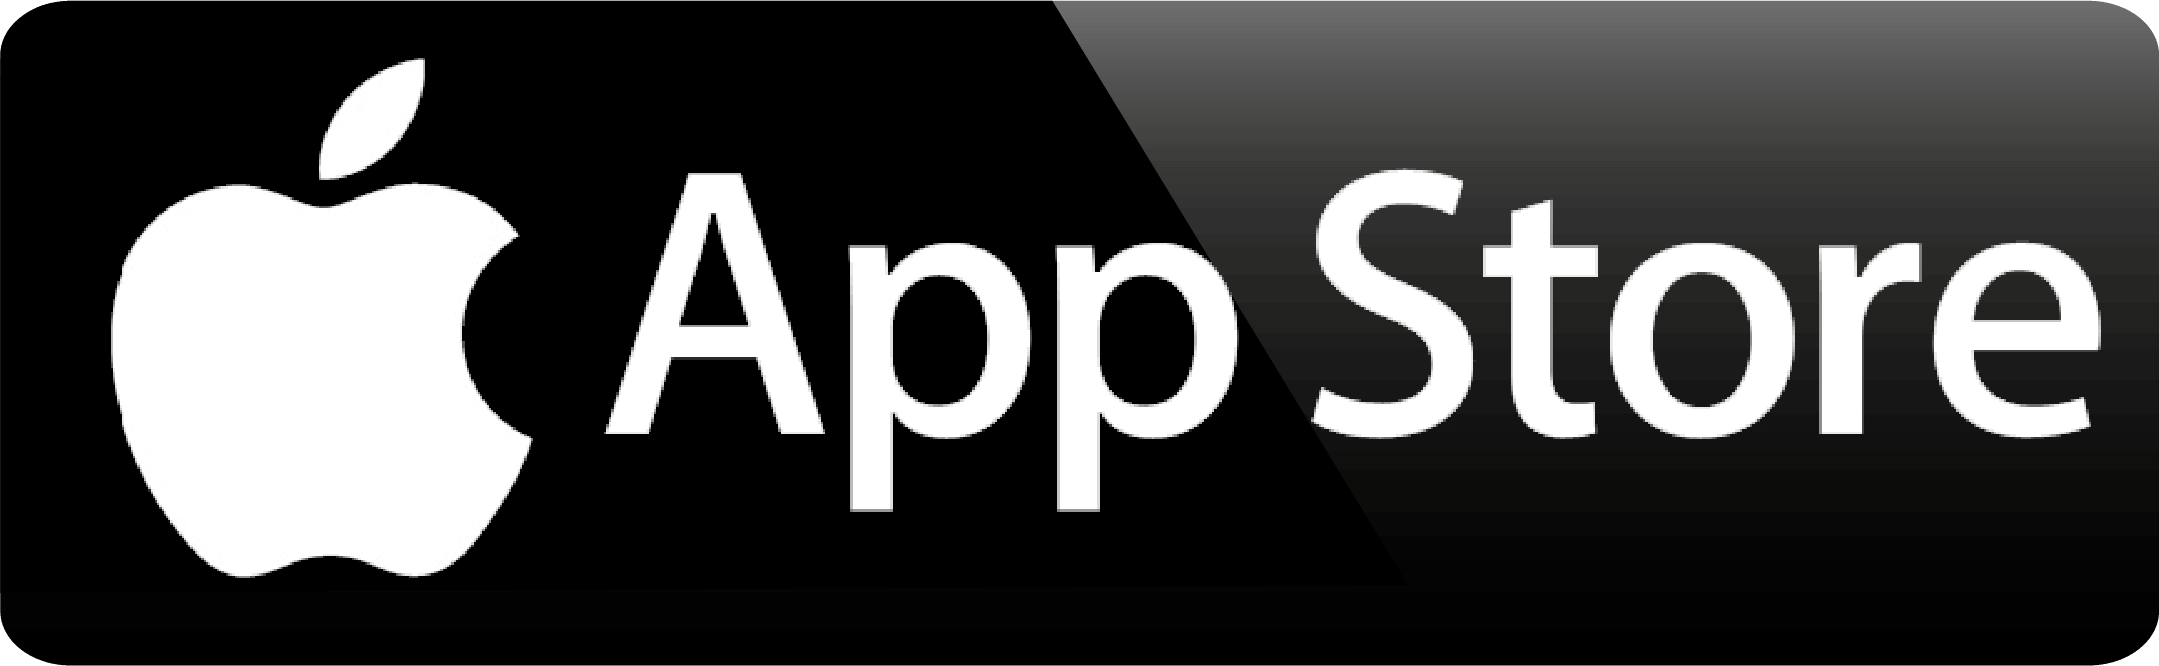 App Store Button